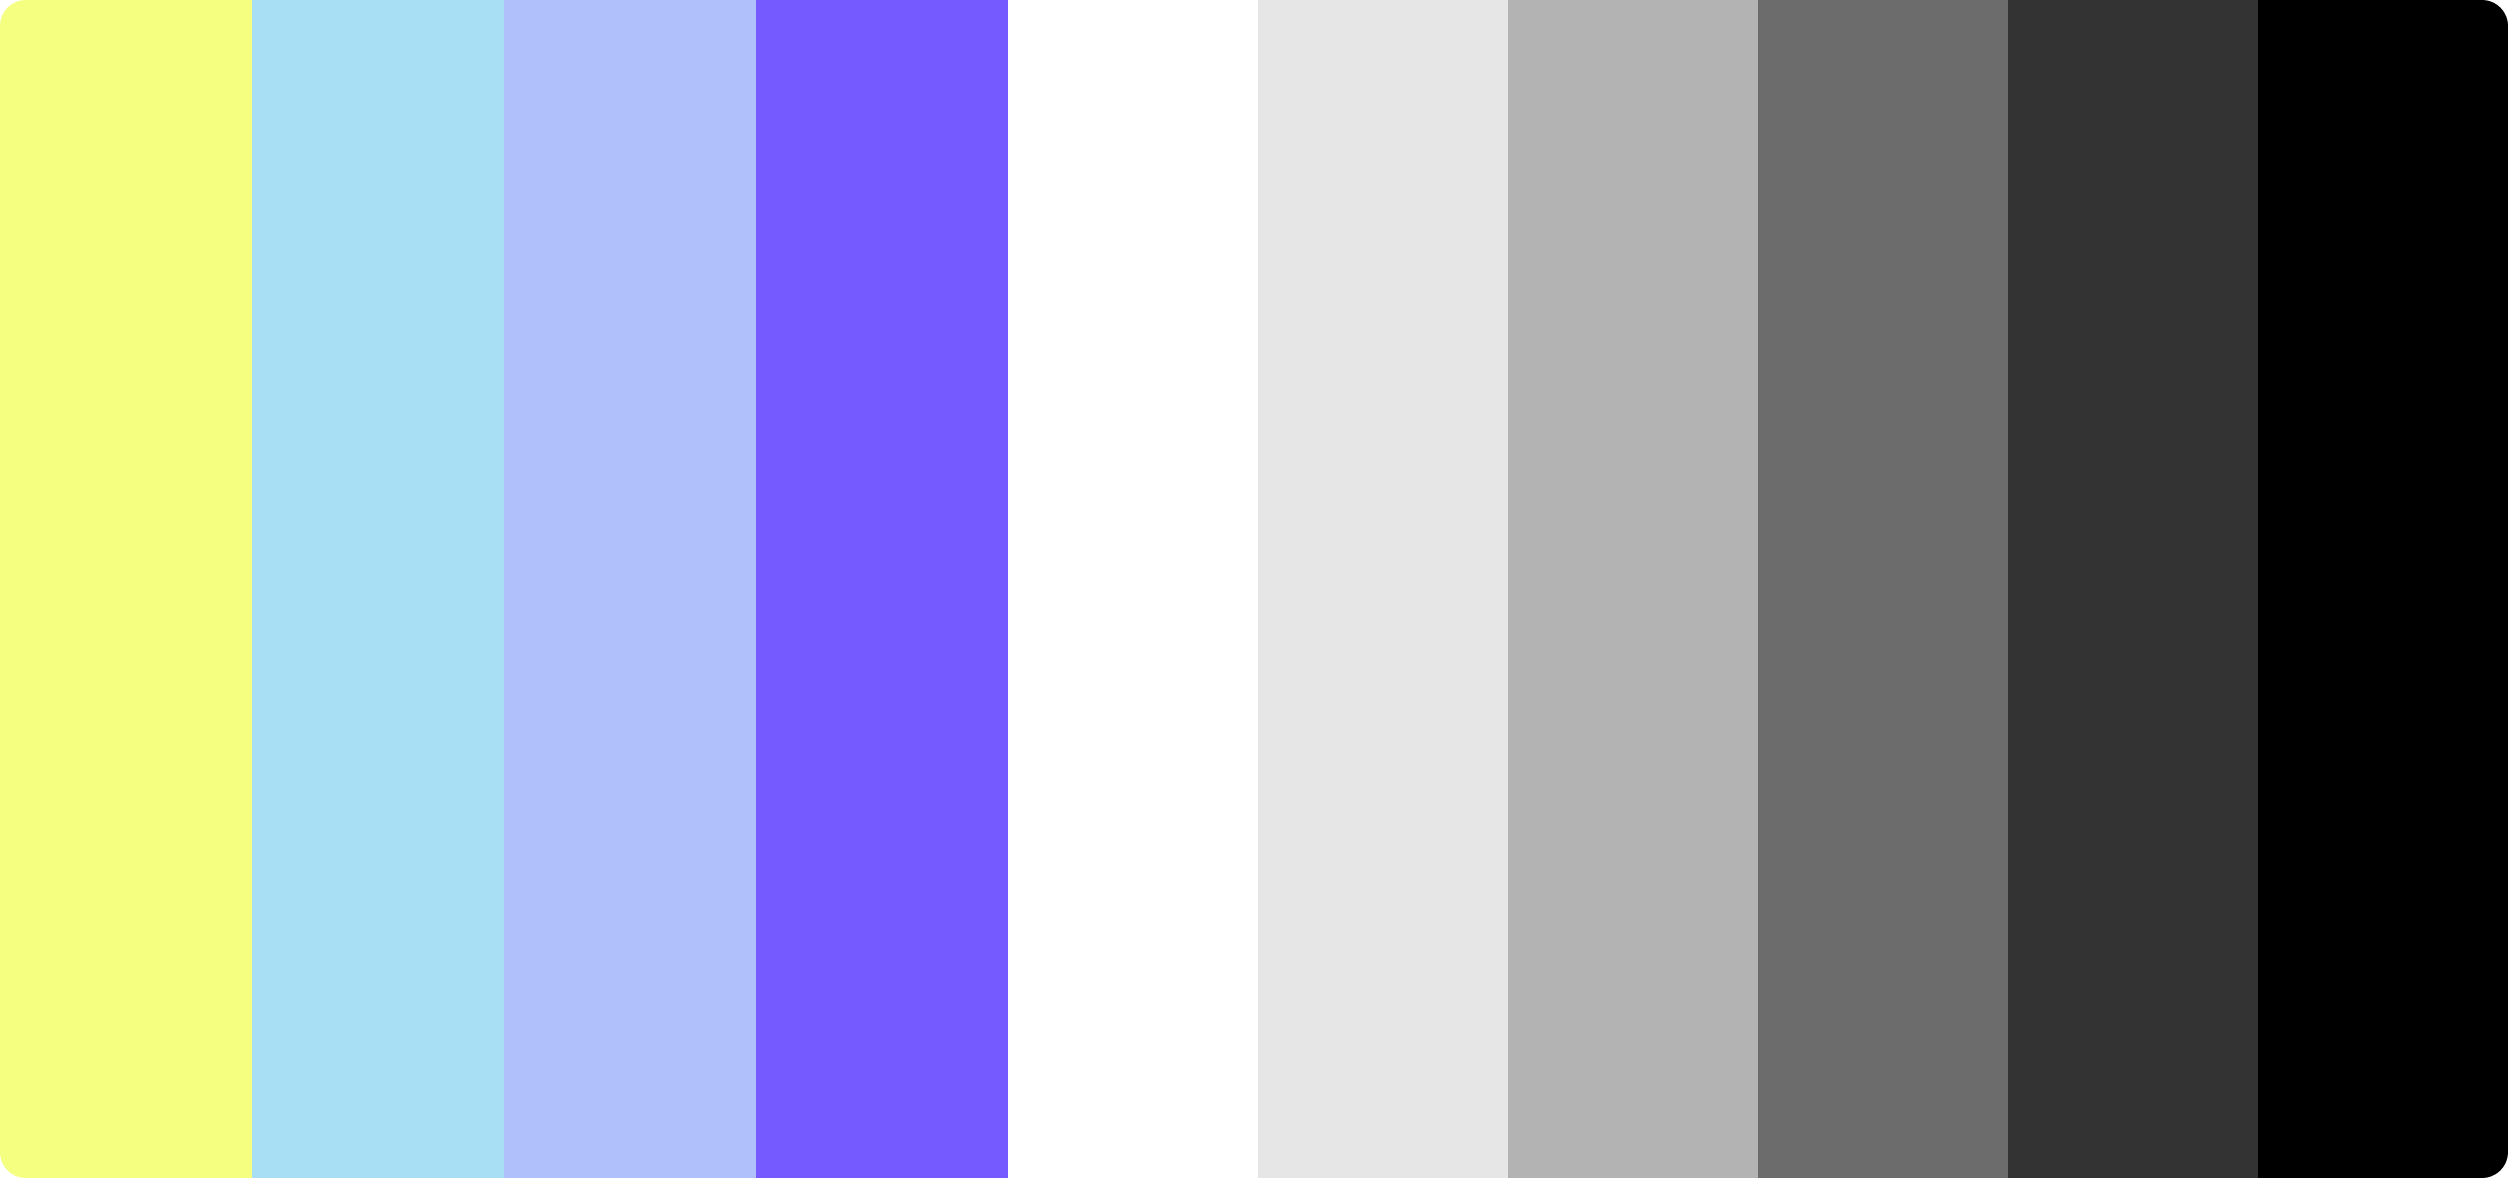 The new Timescale color palette